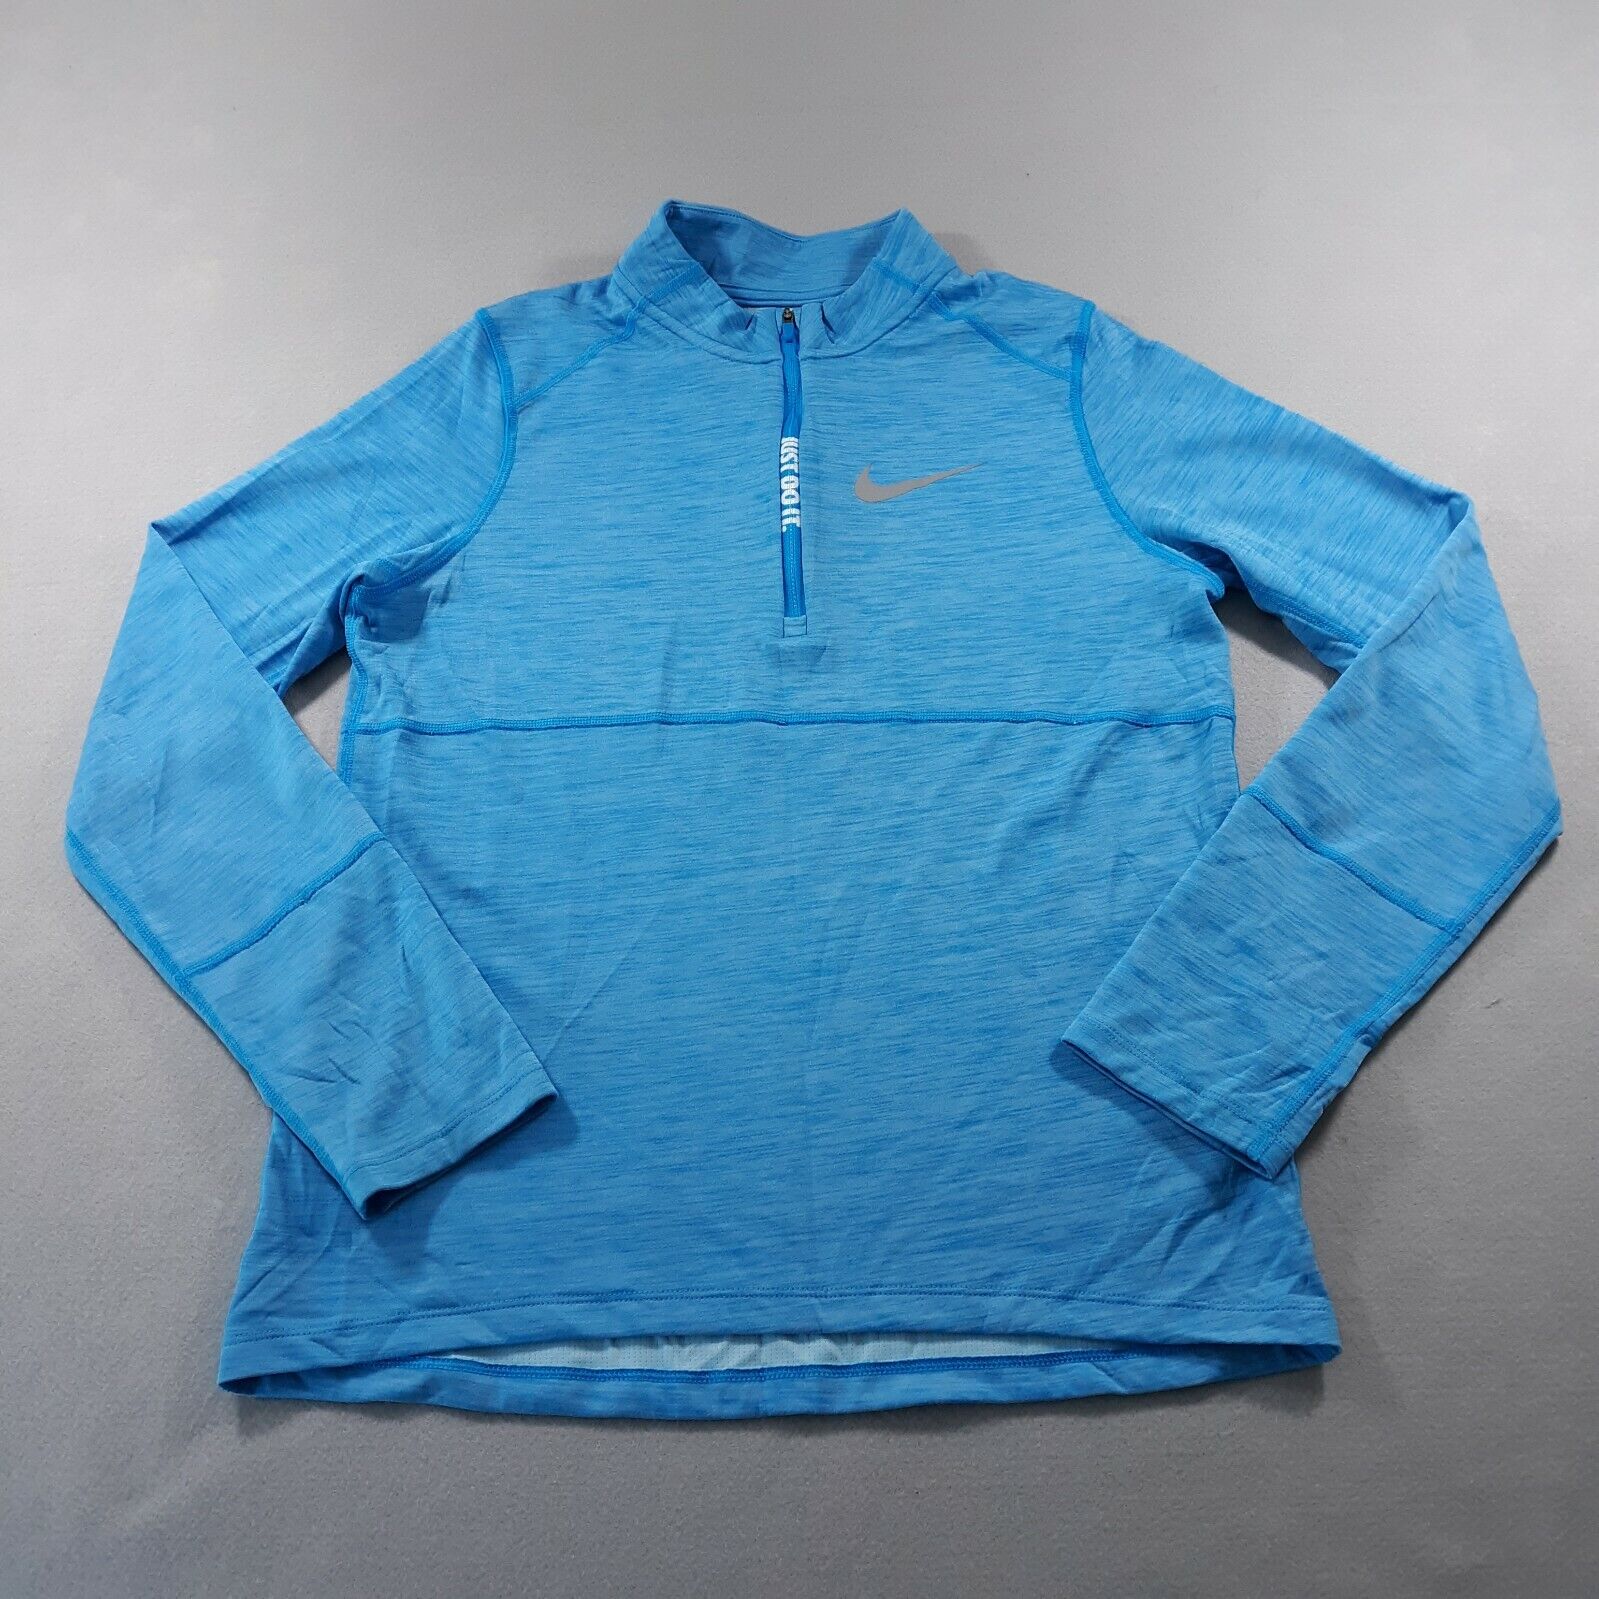 Nike Dri-fit Active Sport Sweatshirt 1/4 Zip Girls Size Xl Light Blue